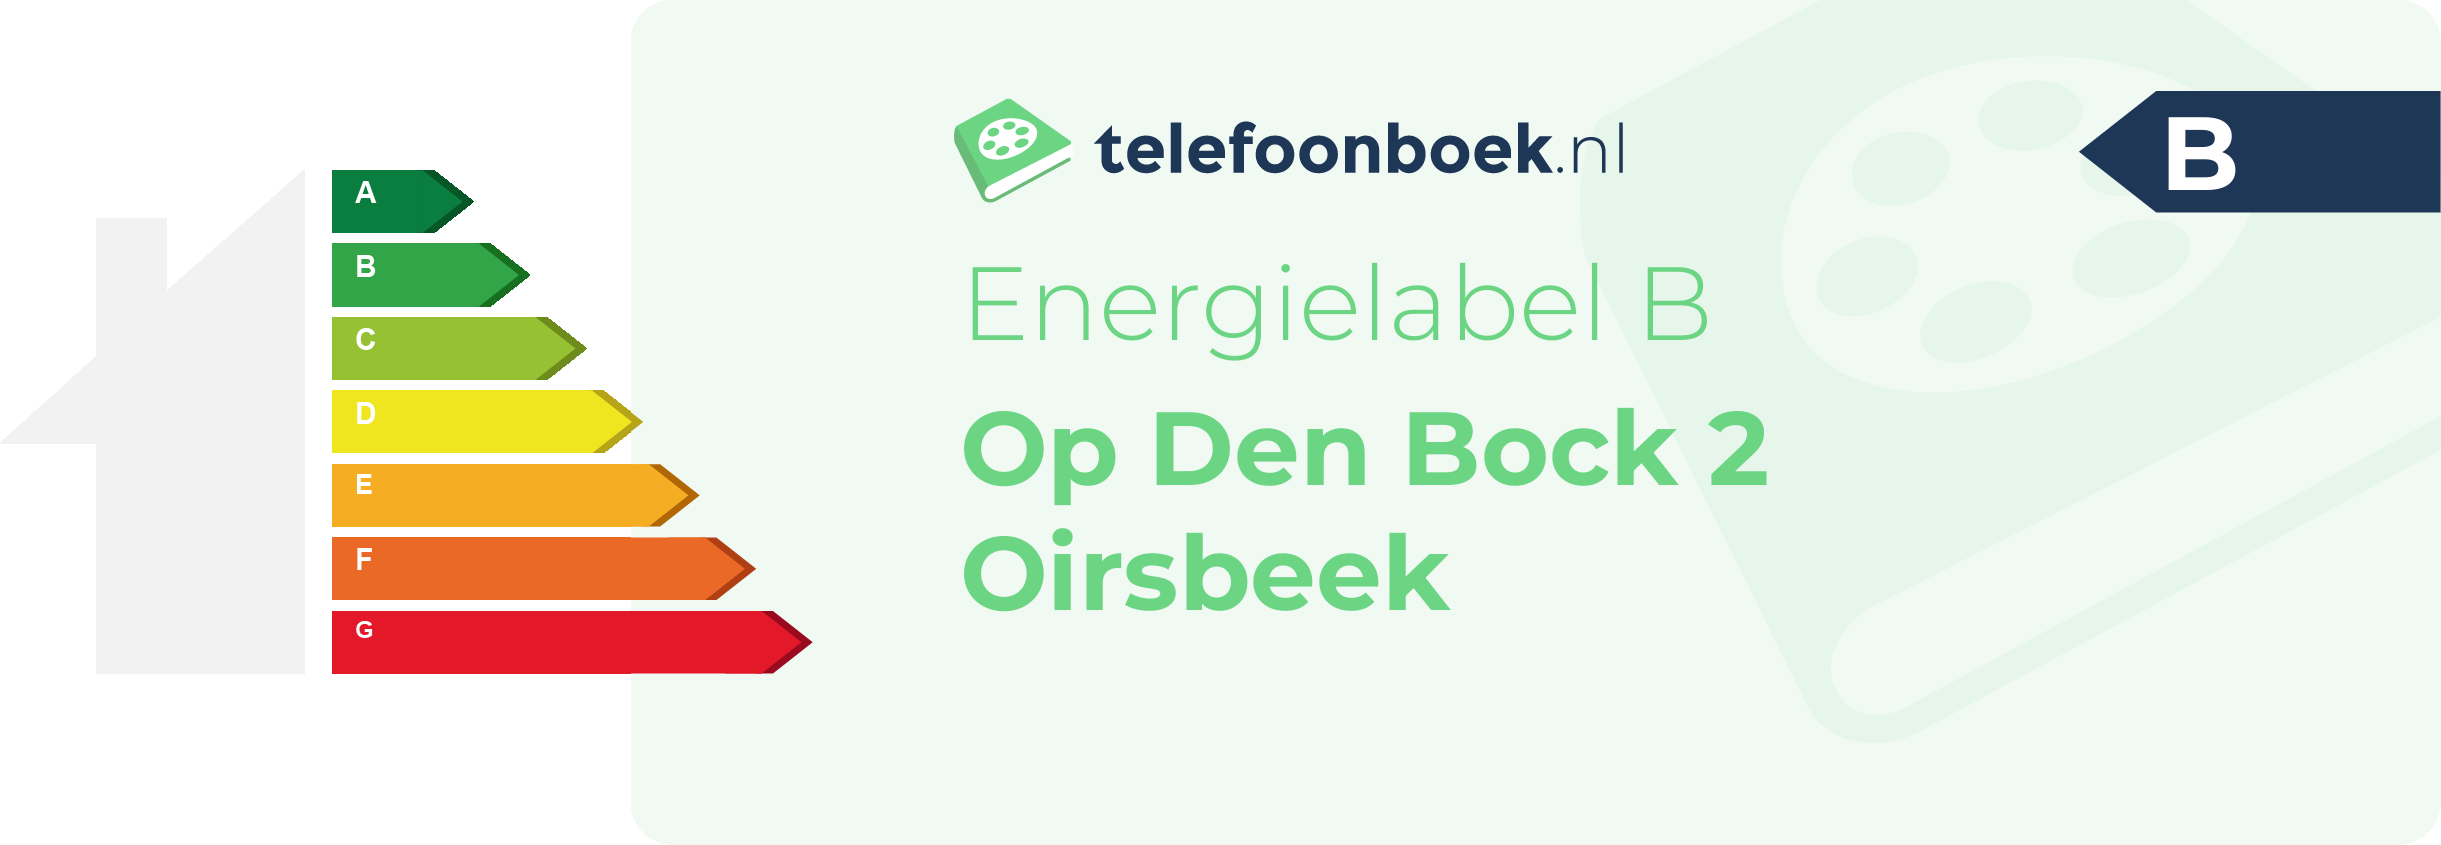 Energielabel Op Den Bock 2 Oirsbeek